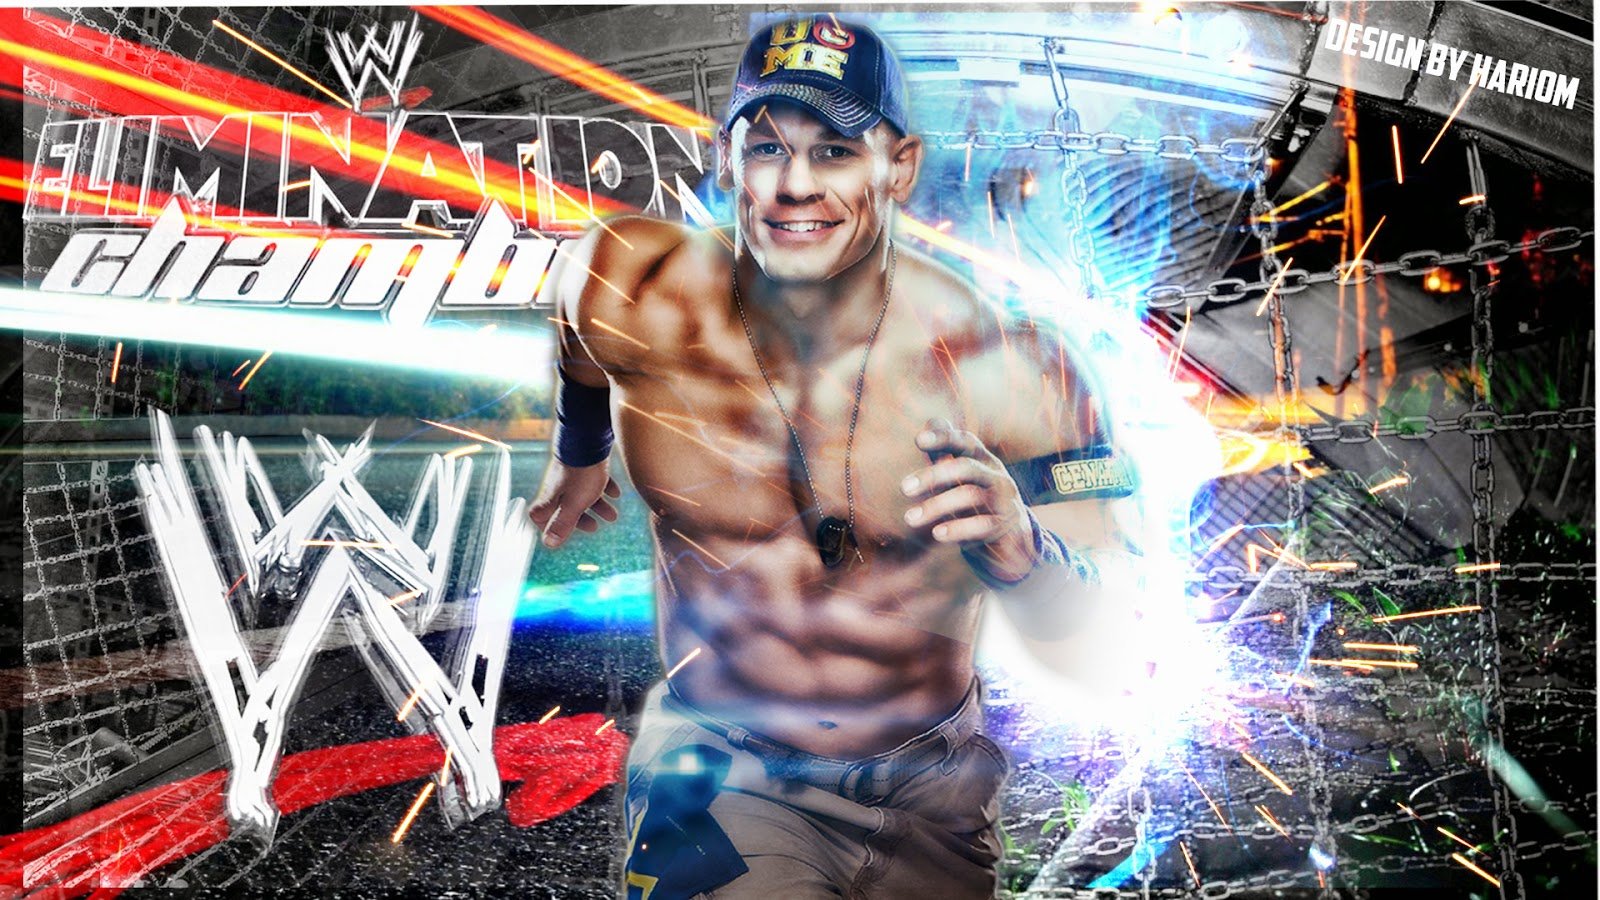 WWE Elimination Chamber 2014 Wallpaper [featJohn Cena ] Design By